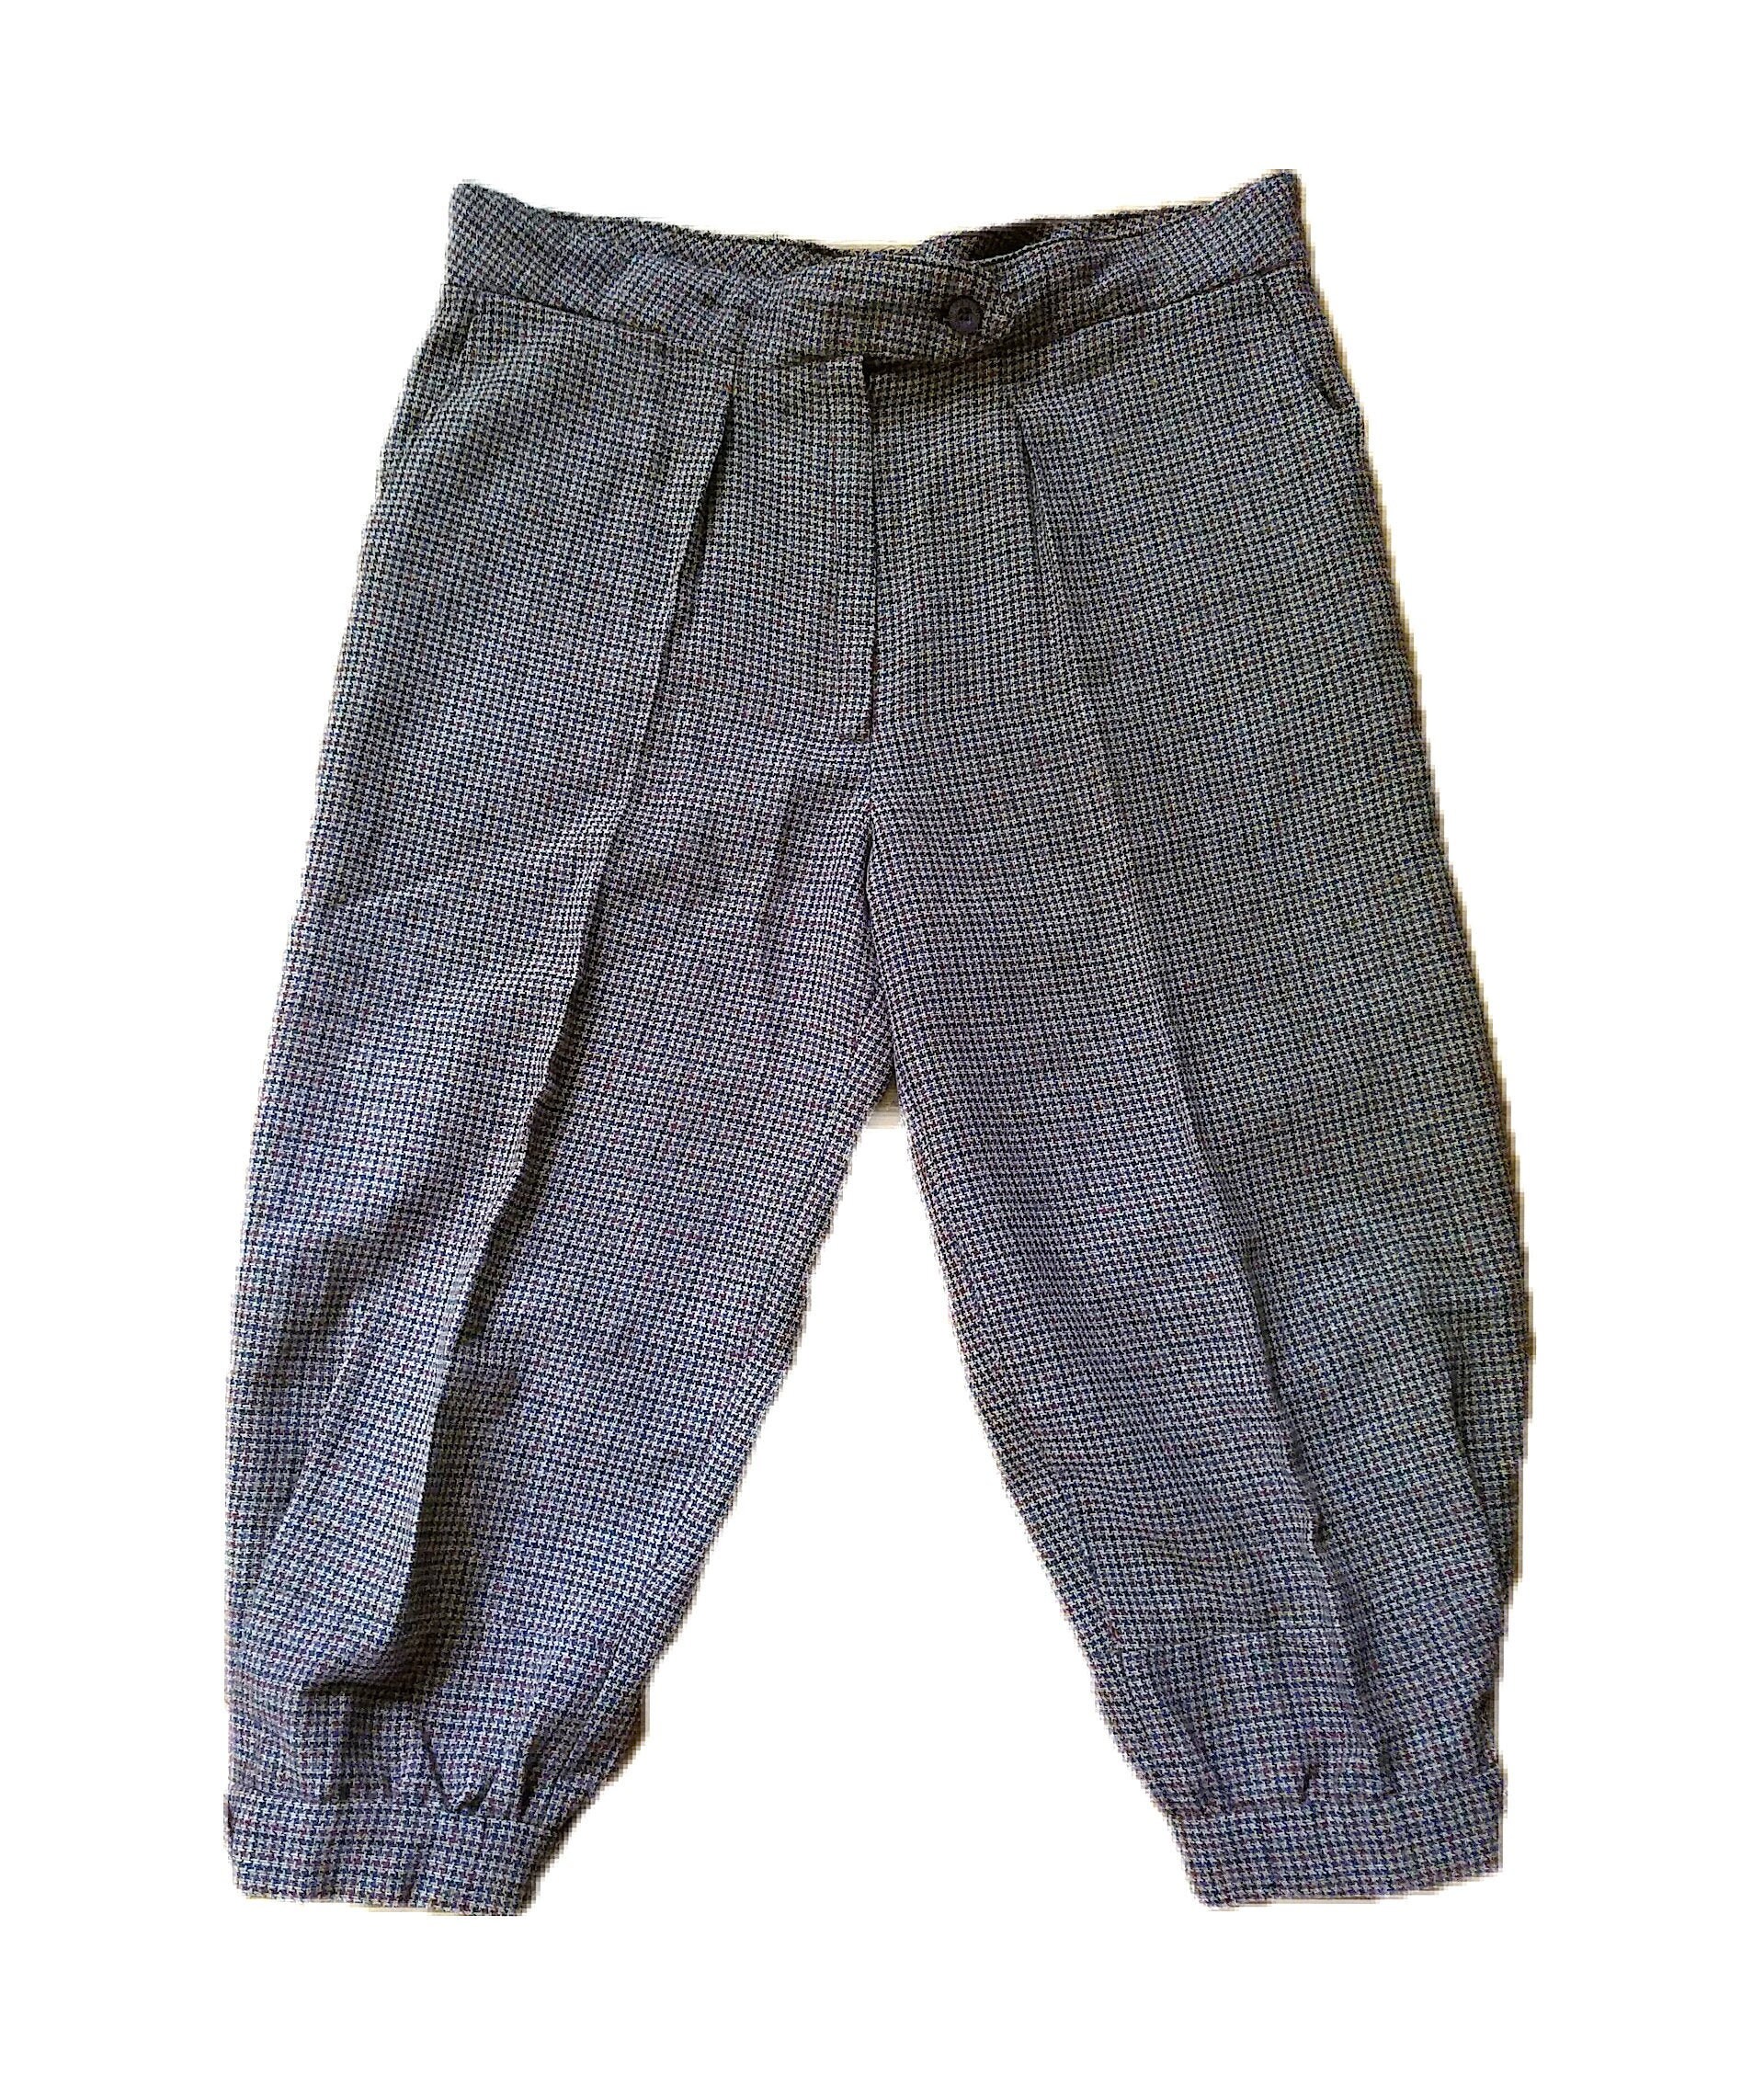 Newsboy Knickers Cropped Wool Pants 1970s Handmade Women | Etsy